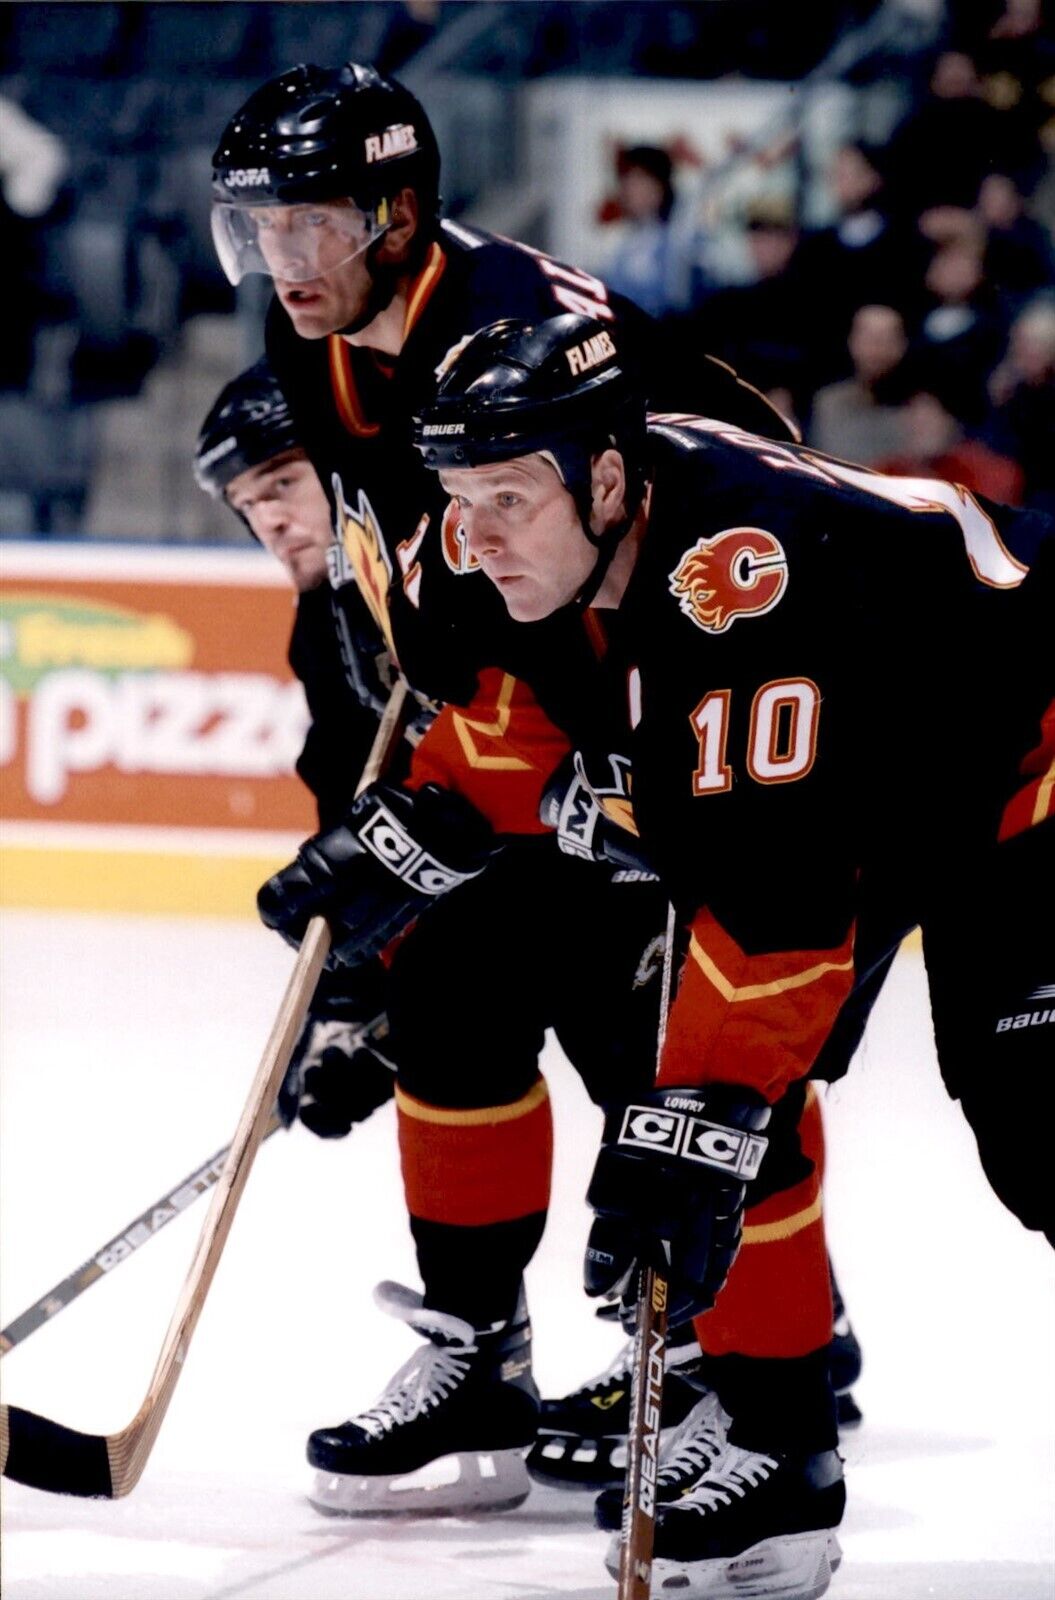 PF23 2000 Original Photo DAVE LOWRY CALGARY FLAMES NHL ICE HOCKEY LEFT WING